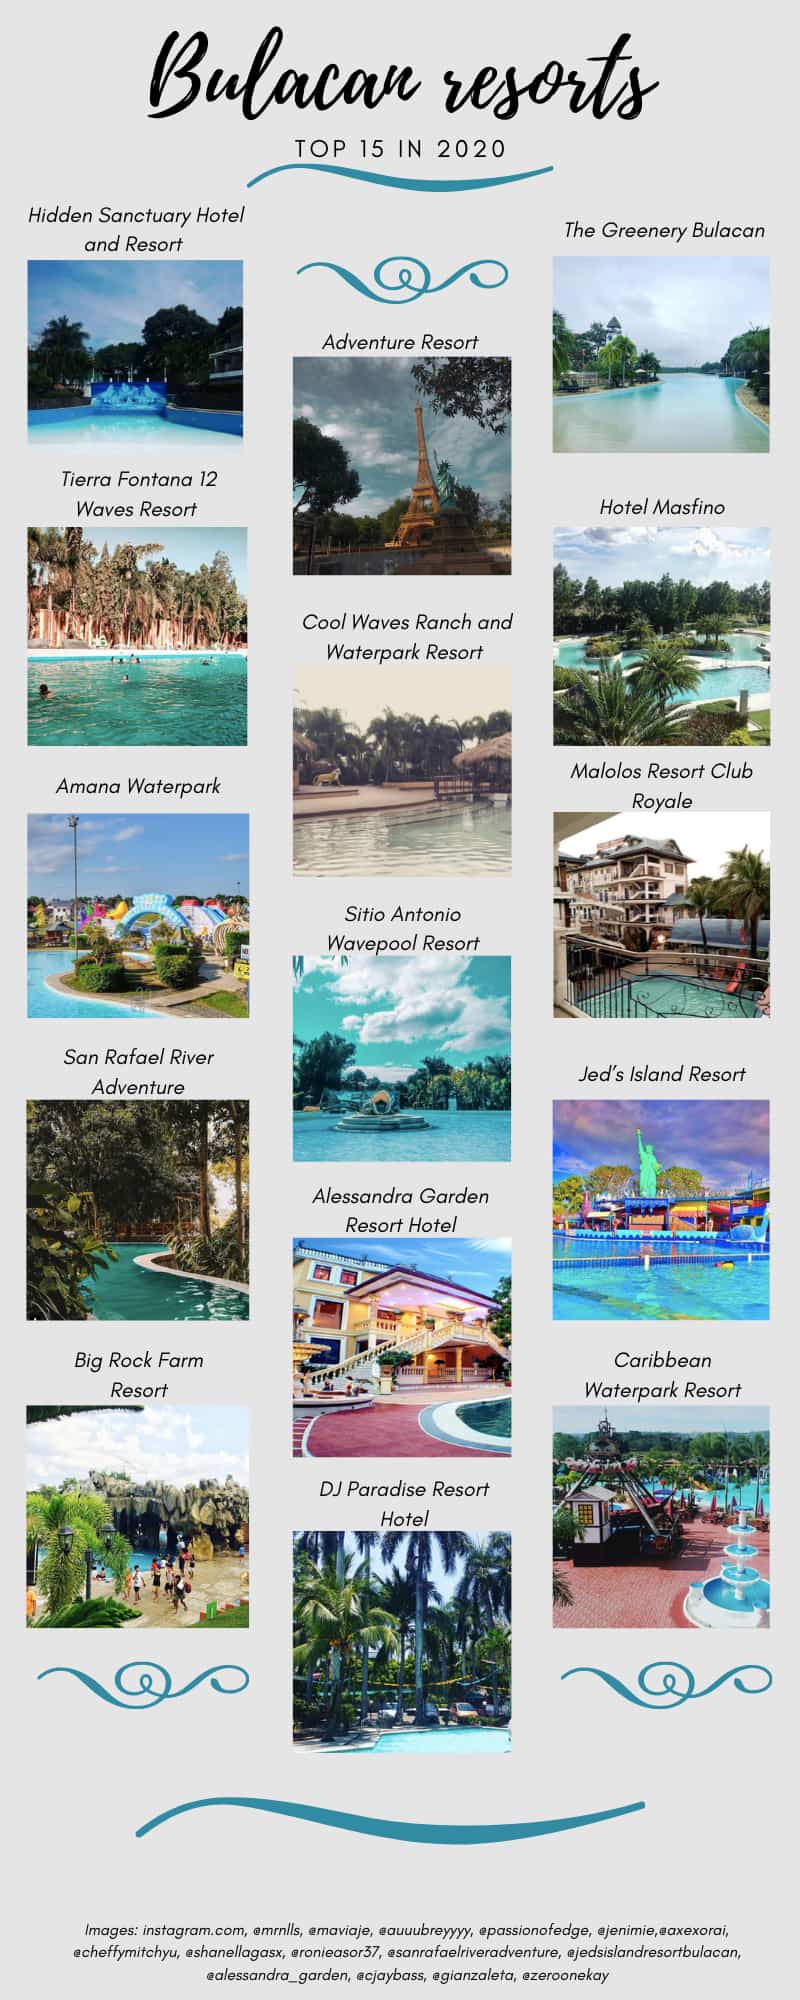 Bulacan Resorts: Top 15 in 2020